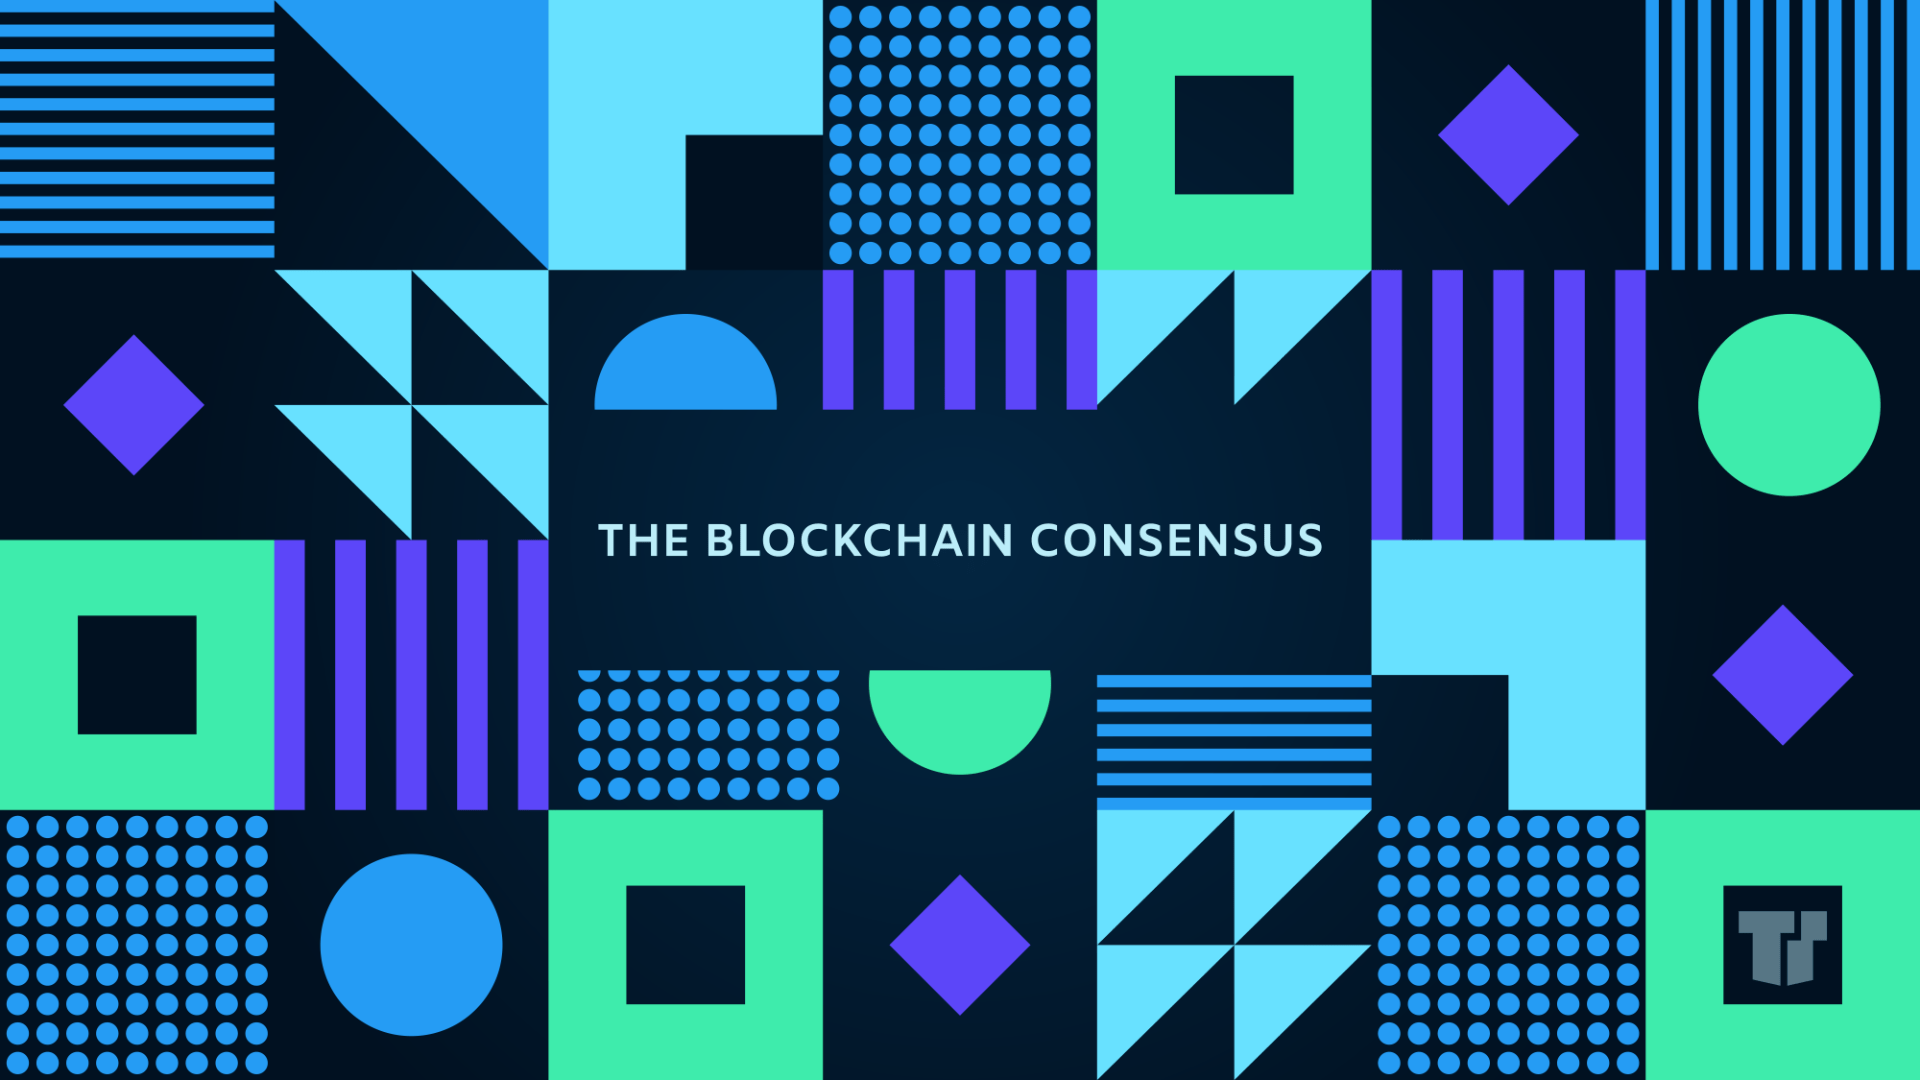 The Blockchain Consensus cover image